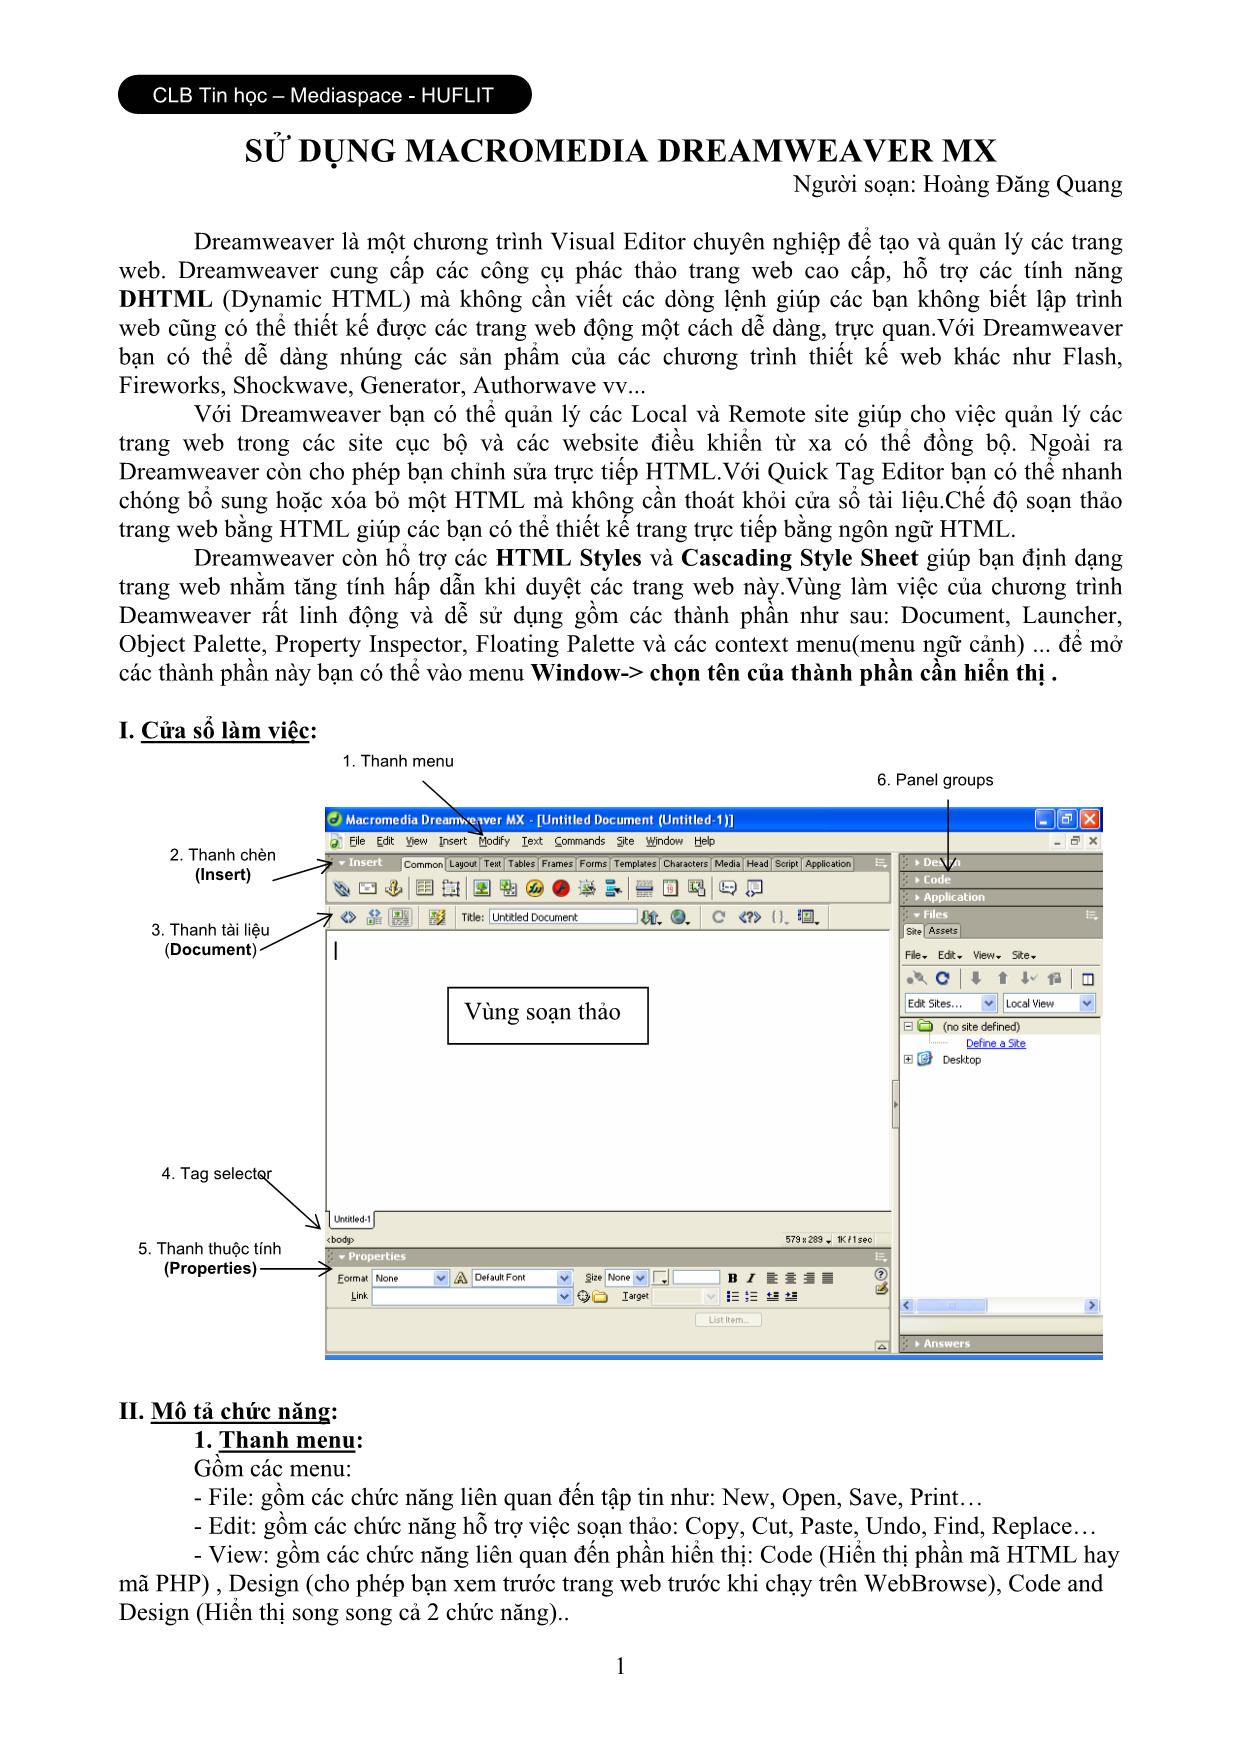 Sử dụng Macromedia Dreamweaver MX trang 1